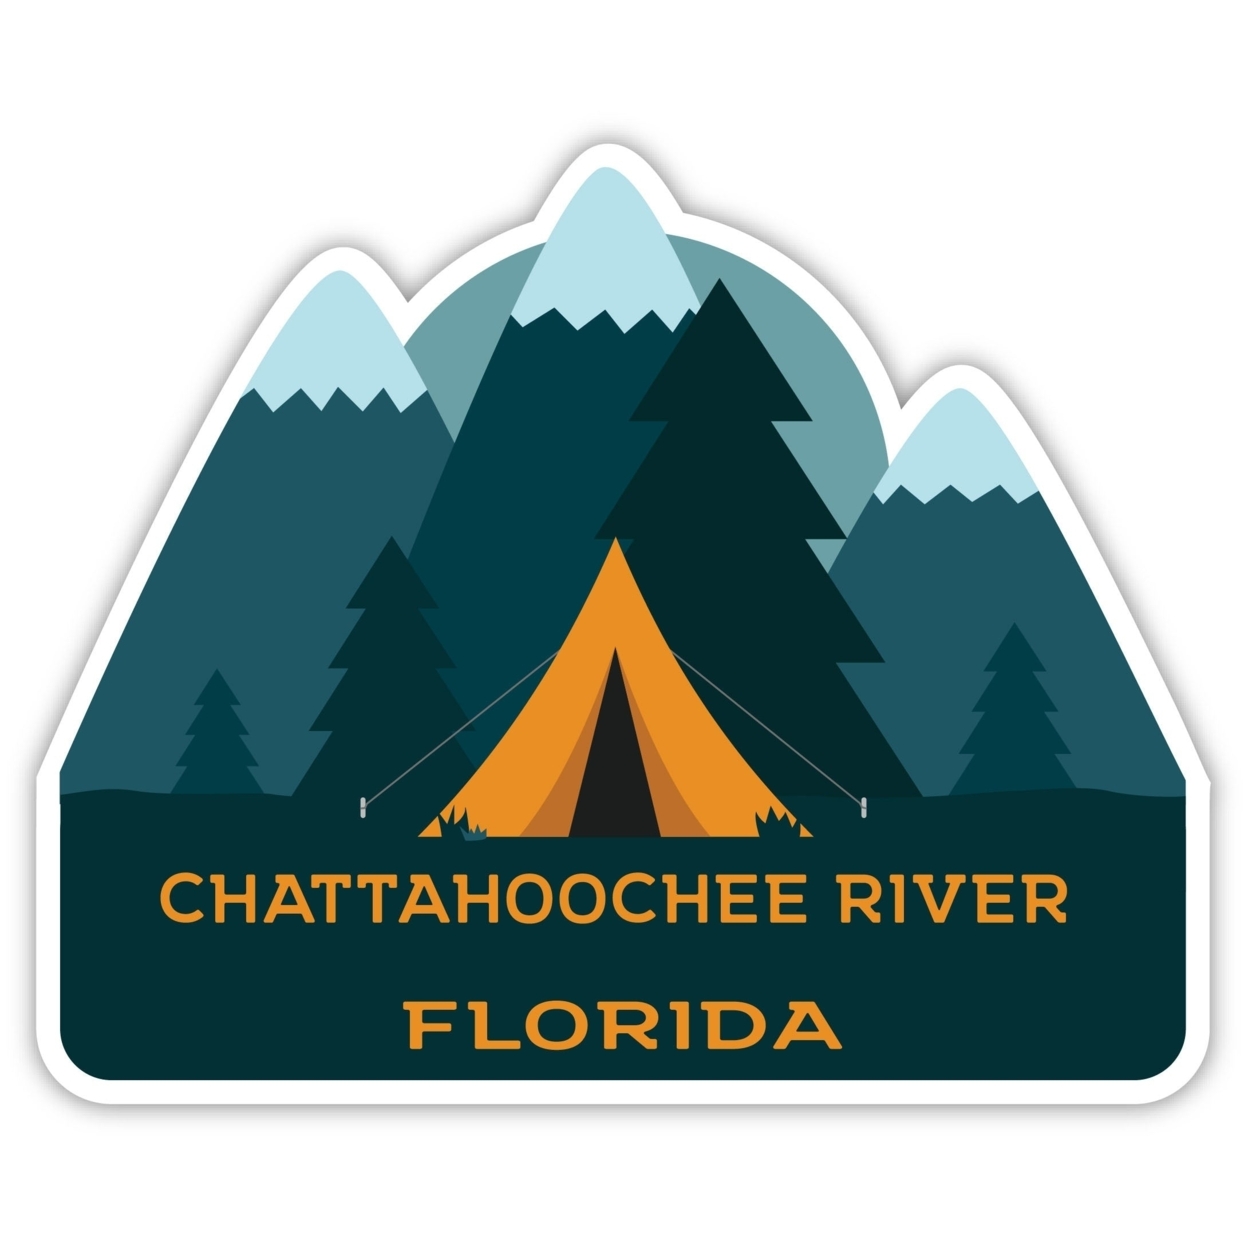 Chattahoochee River Florida Souvenir Decorative Stickers (Choose Theme And Size) - Single Unit, 4-Inch, Tent